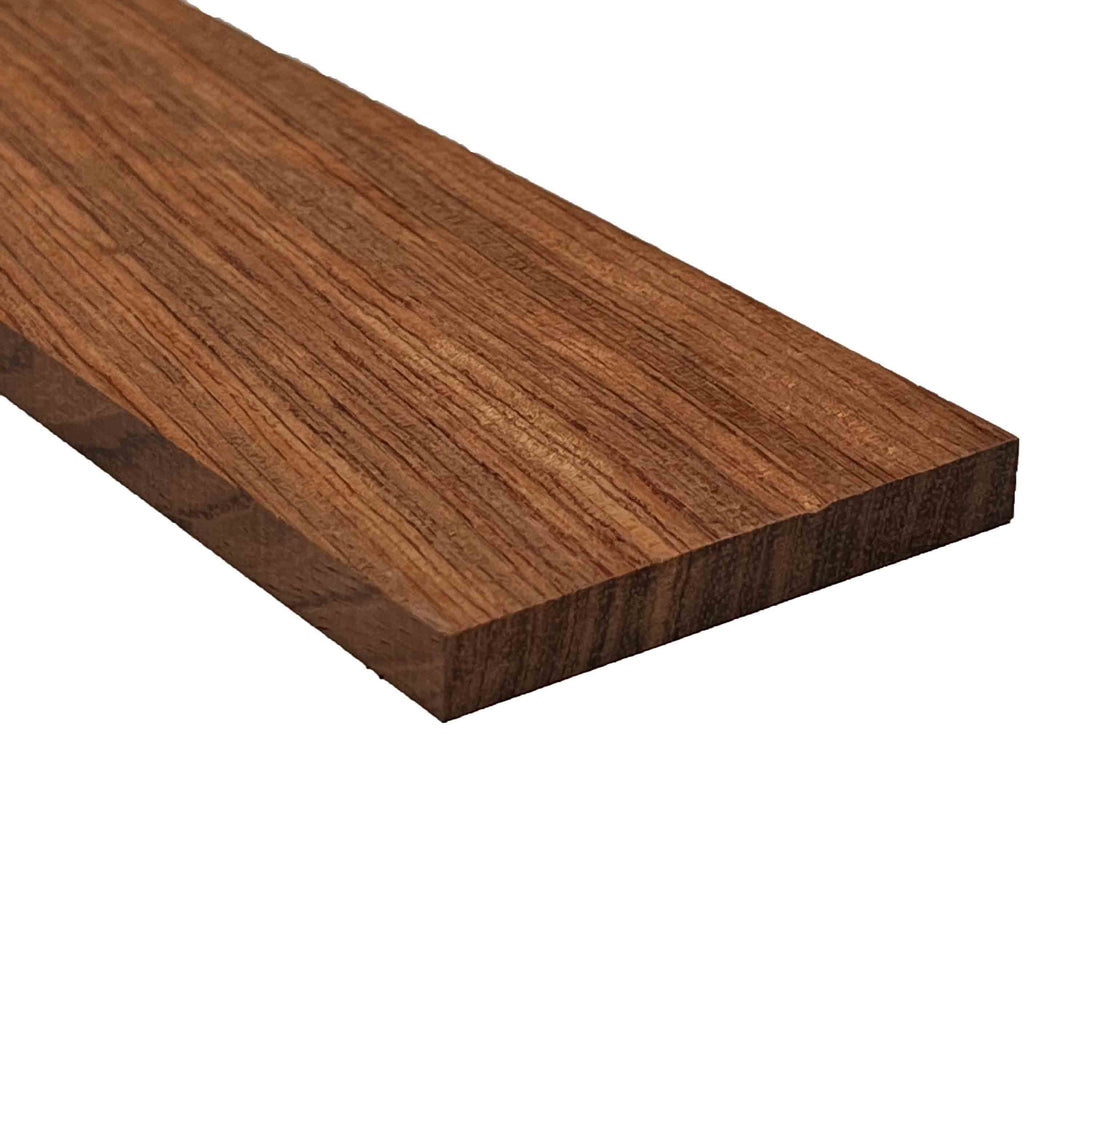 Bubinga Thin Stock Lumber Boards Wood Crafts - Exotic Wood Zone - Buy online Across USA 